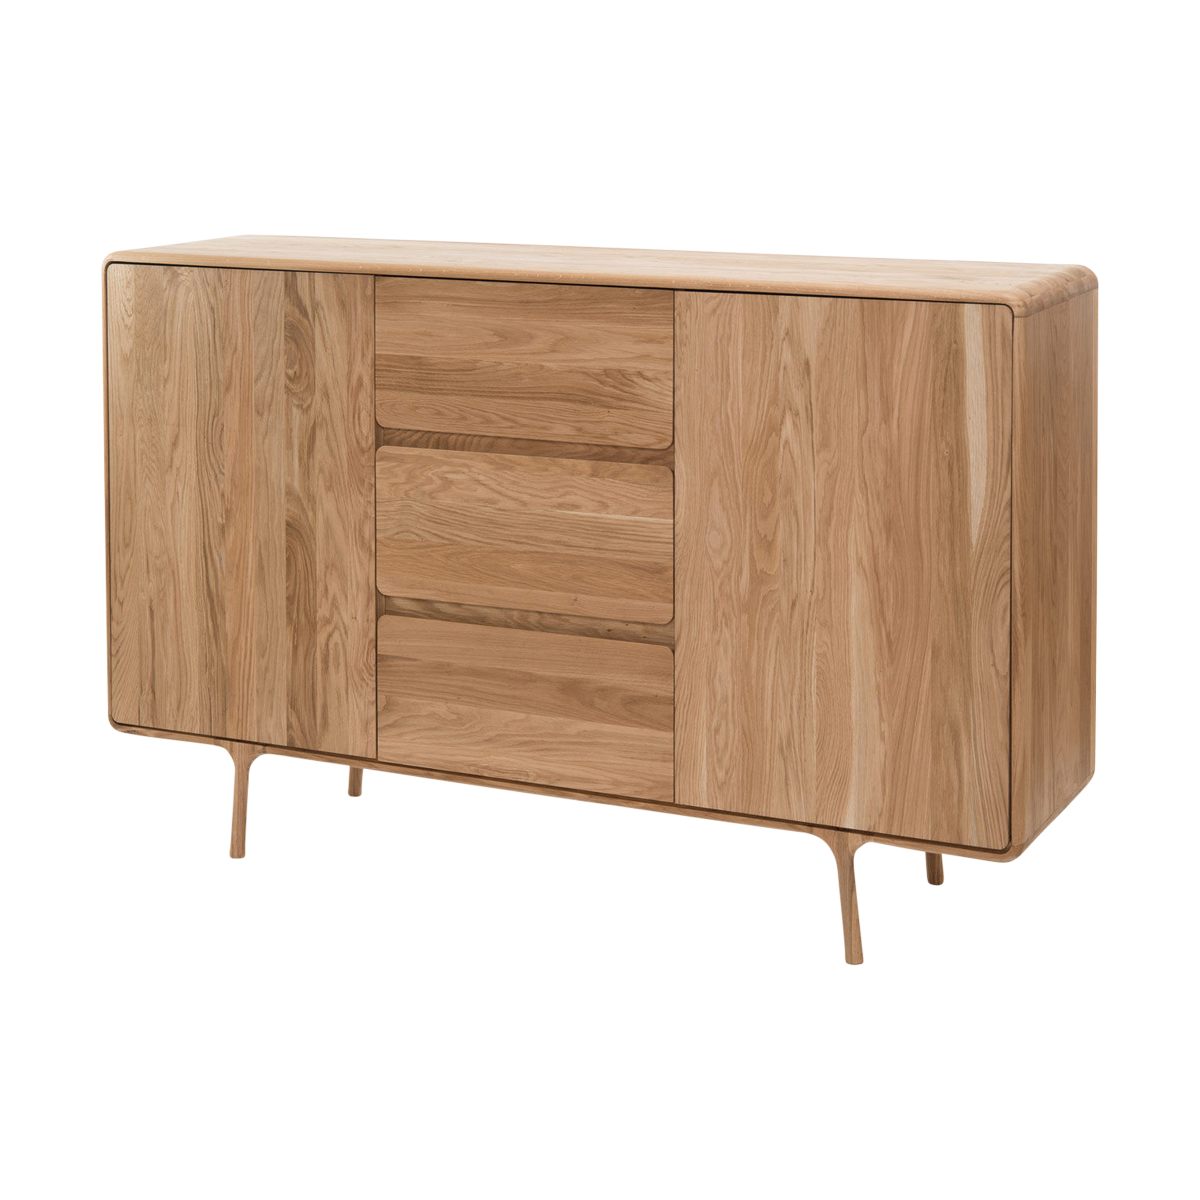 Fawn dresser houten ladekast naturel - 180 x 110 cm